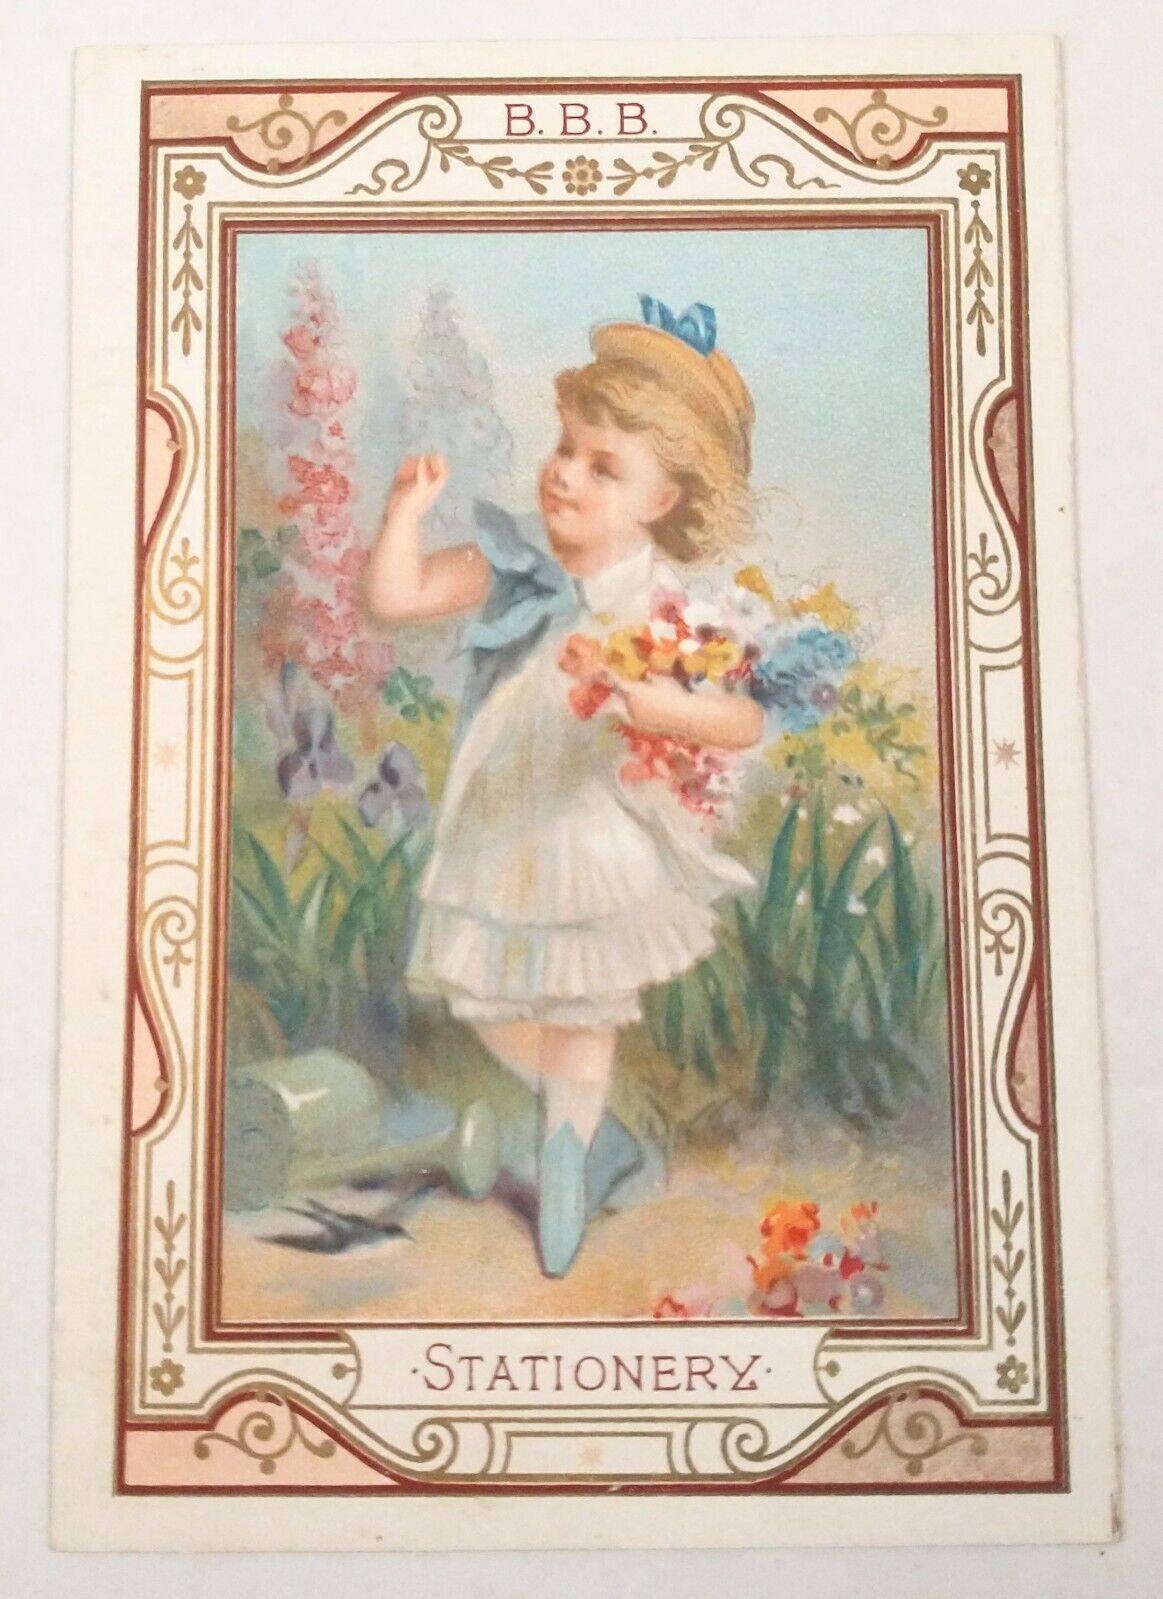 1880s B.B.B. Stationery Chester Pennsylvania Precious Gems Victorian Trade Card